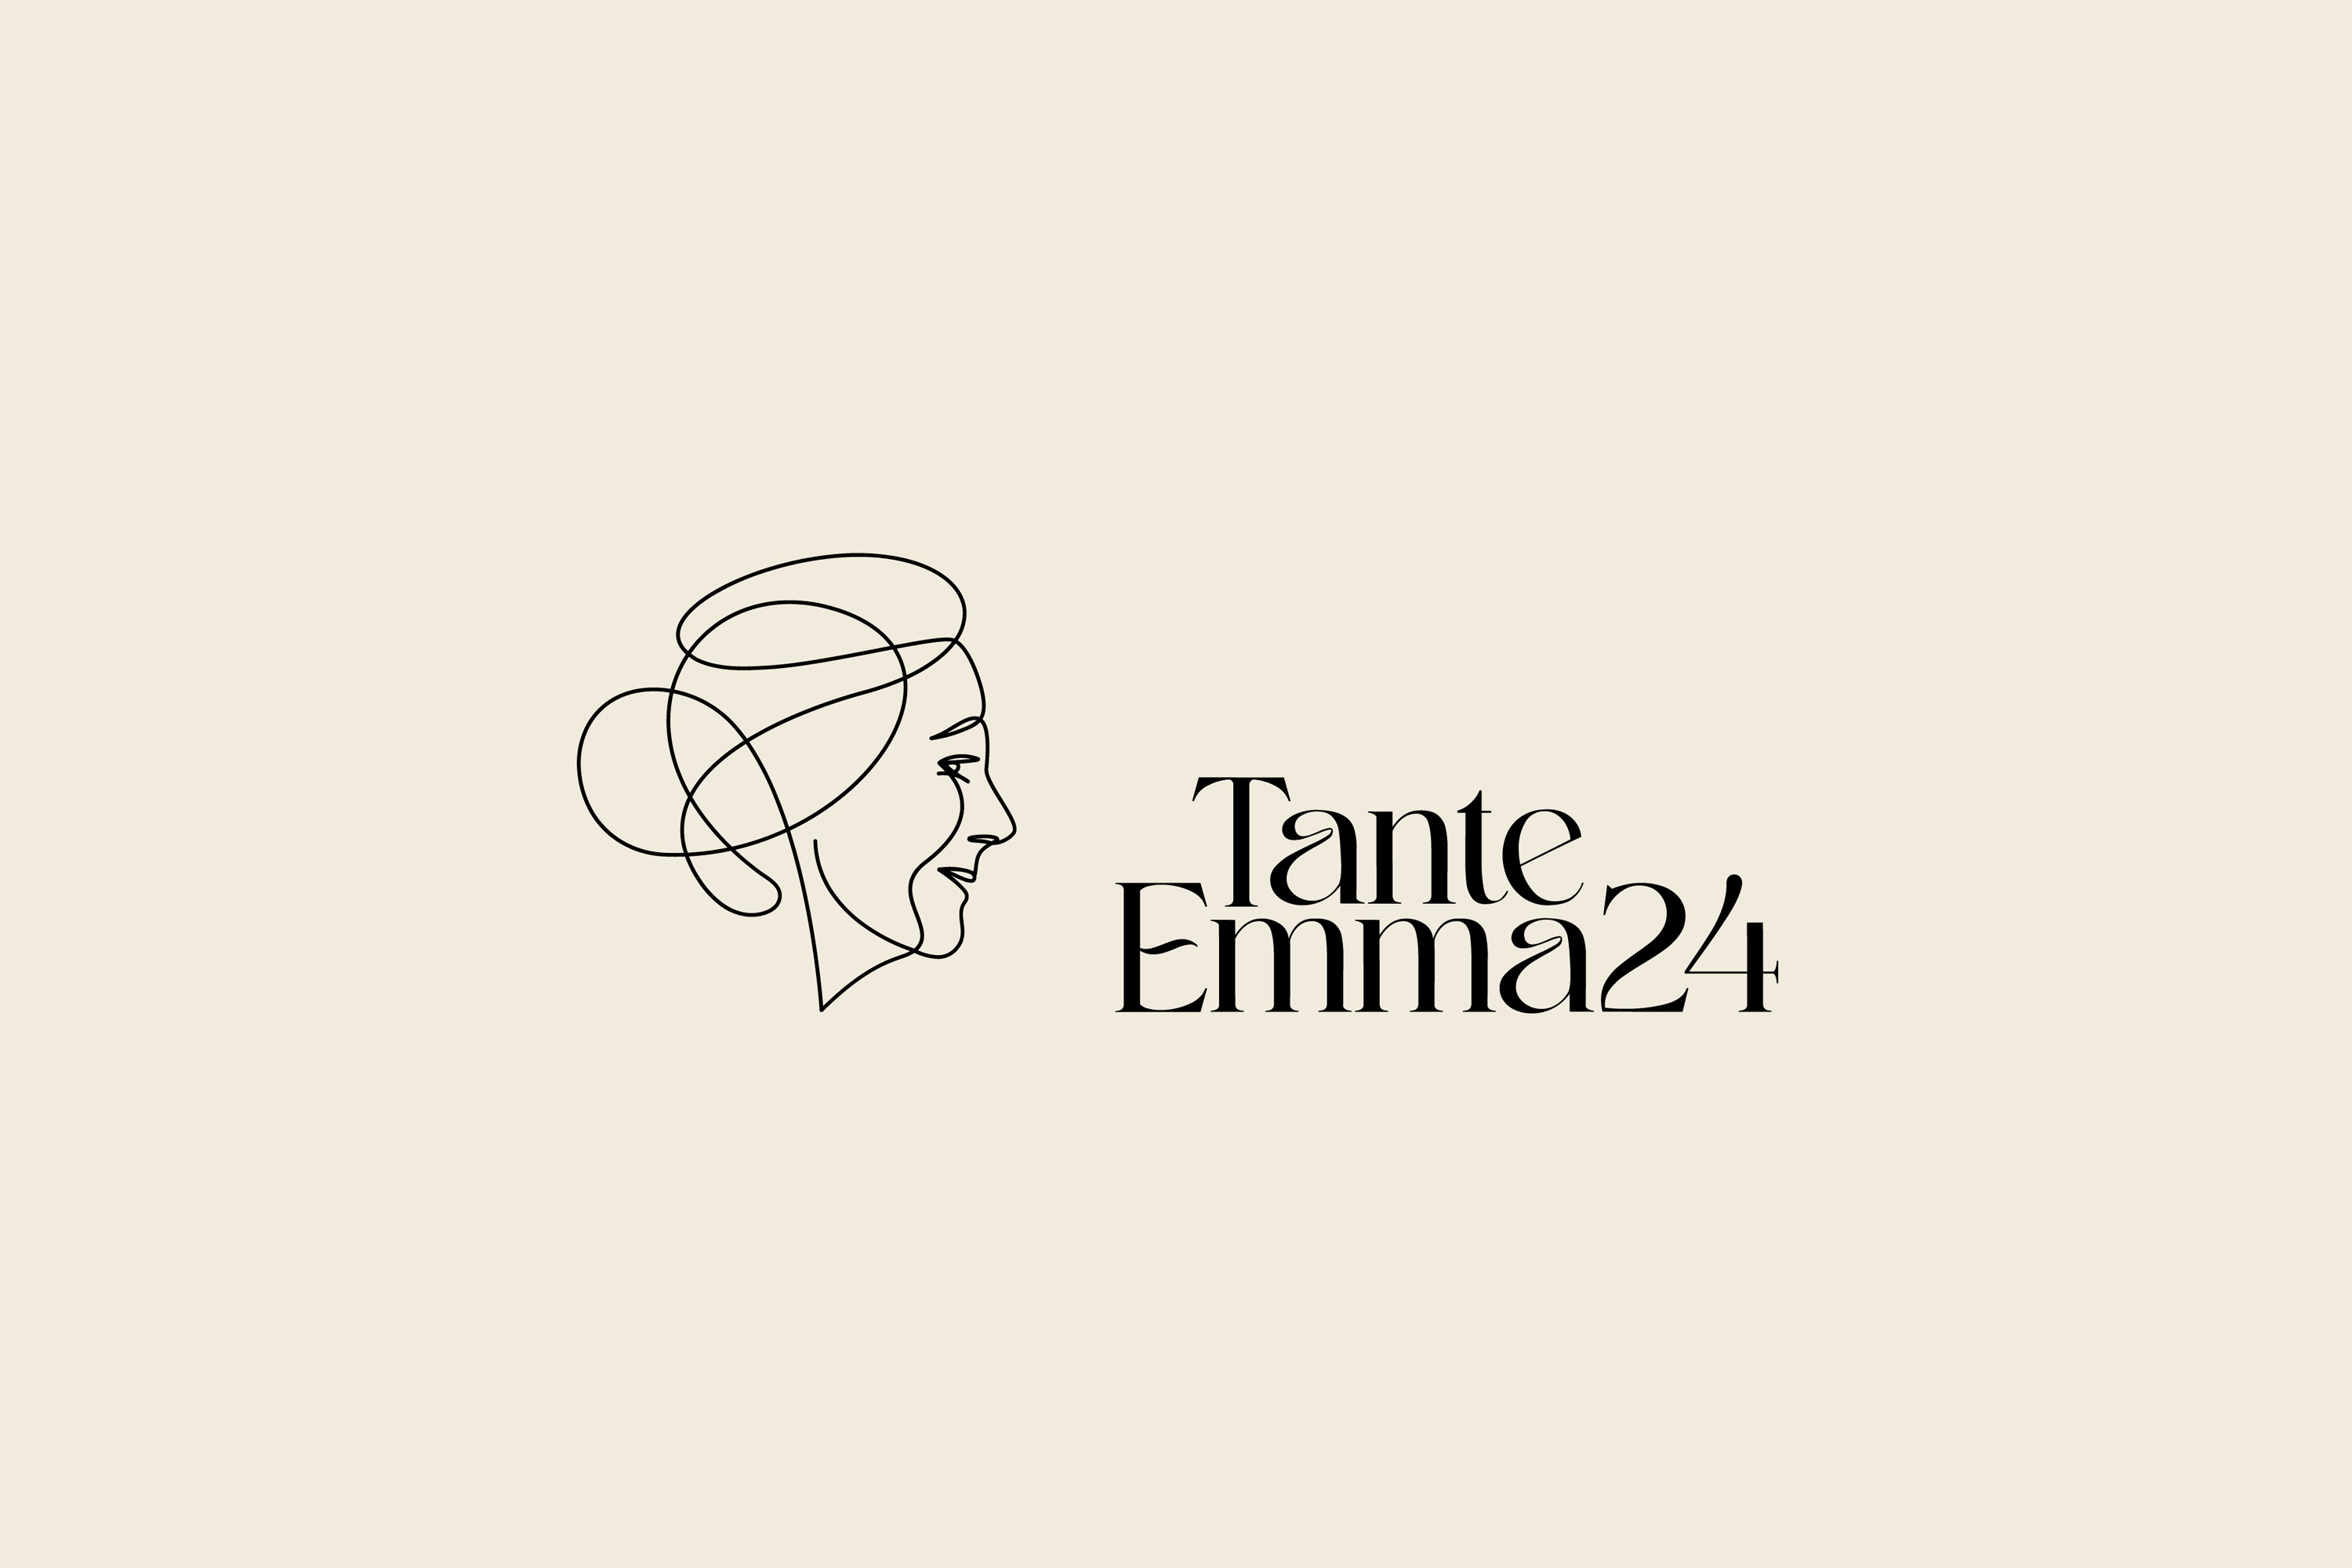 TanteEmma24 // close2 new media GmbH